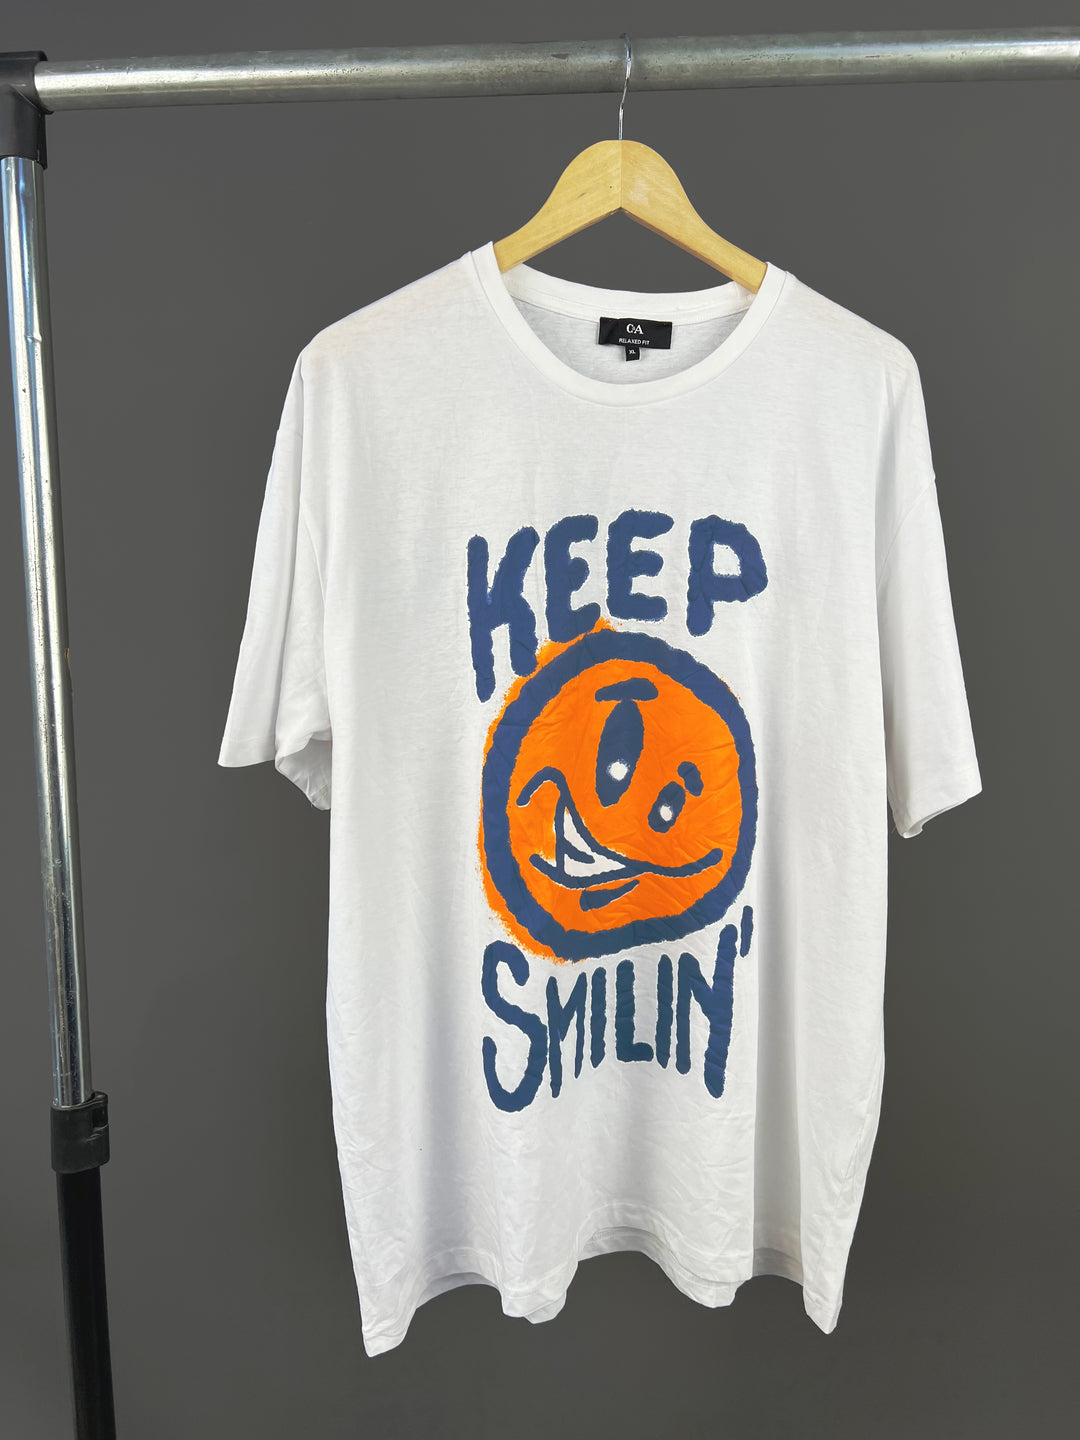 C&A keep smiling t-shirt